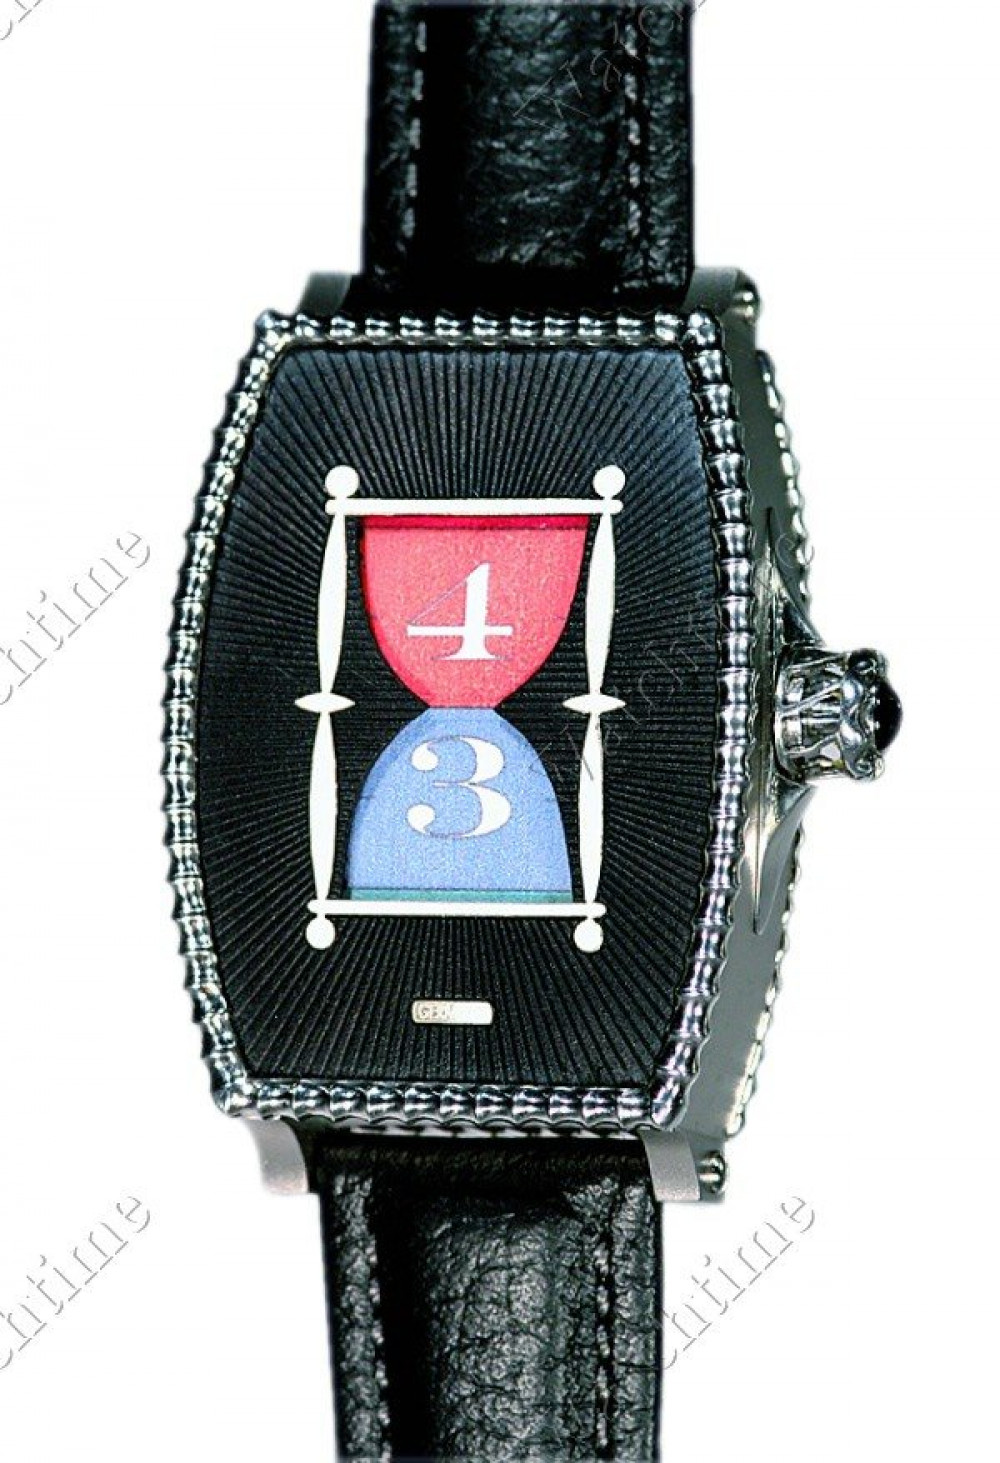 Zegarek firmy Bleitz, model Piktus Tempus